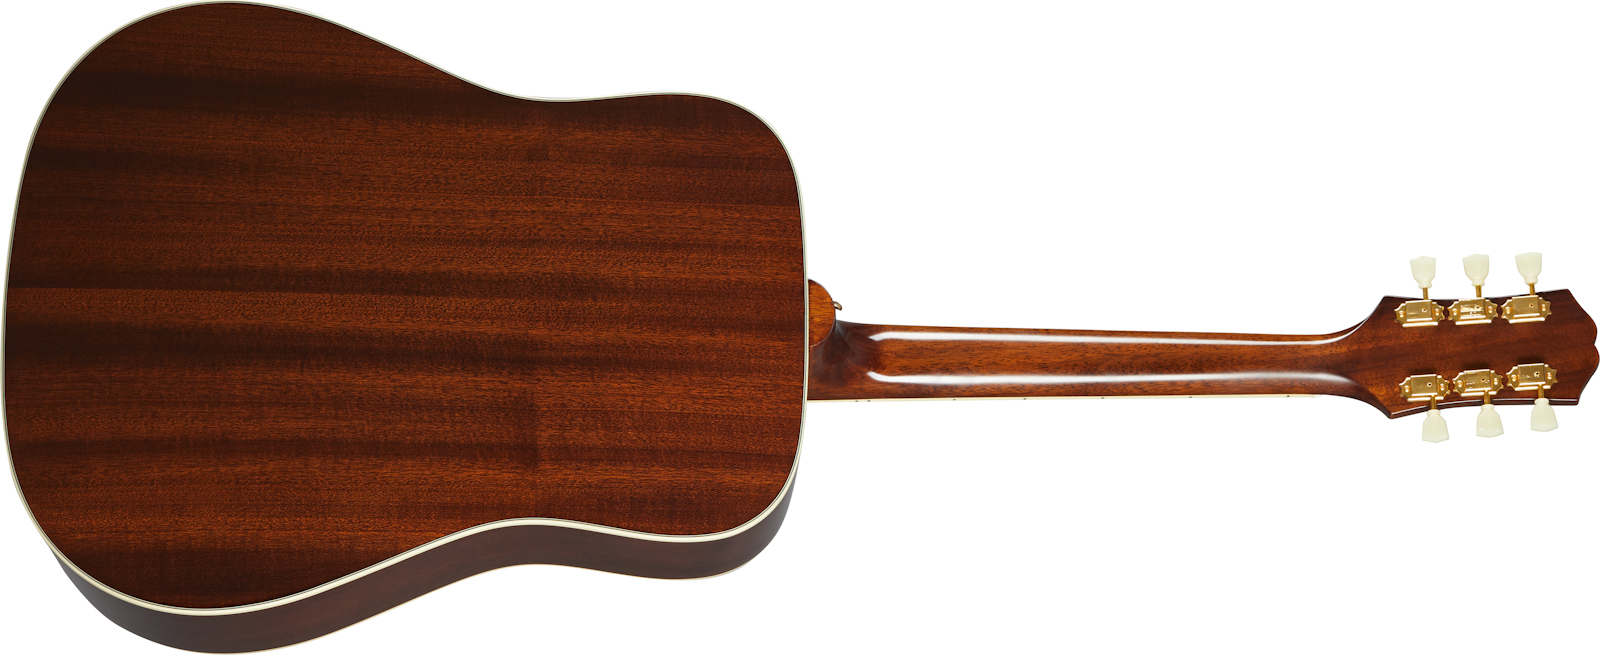 Epiphone Hummingbird Inspired By Gibson Dreadnought Epicea Acajou Lau - Aged Antique Natural - Elektroakustische Gitarre - Variation 1